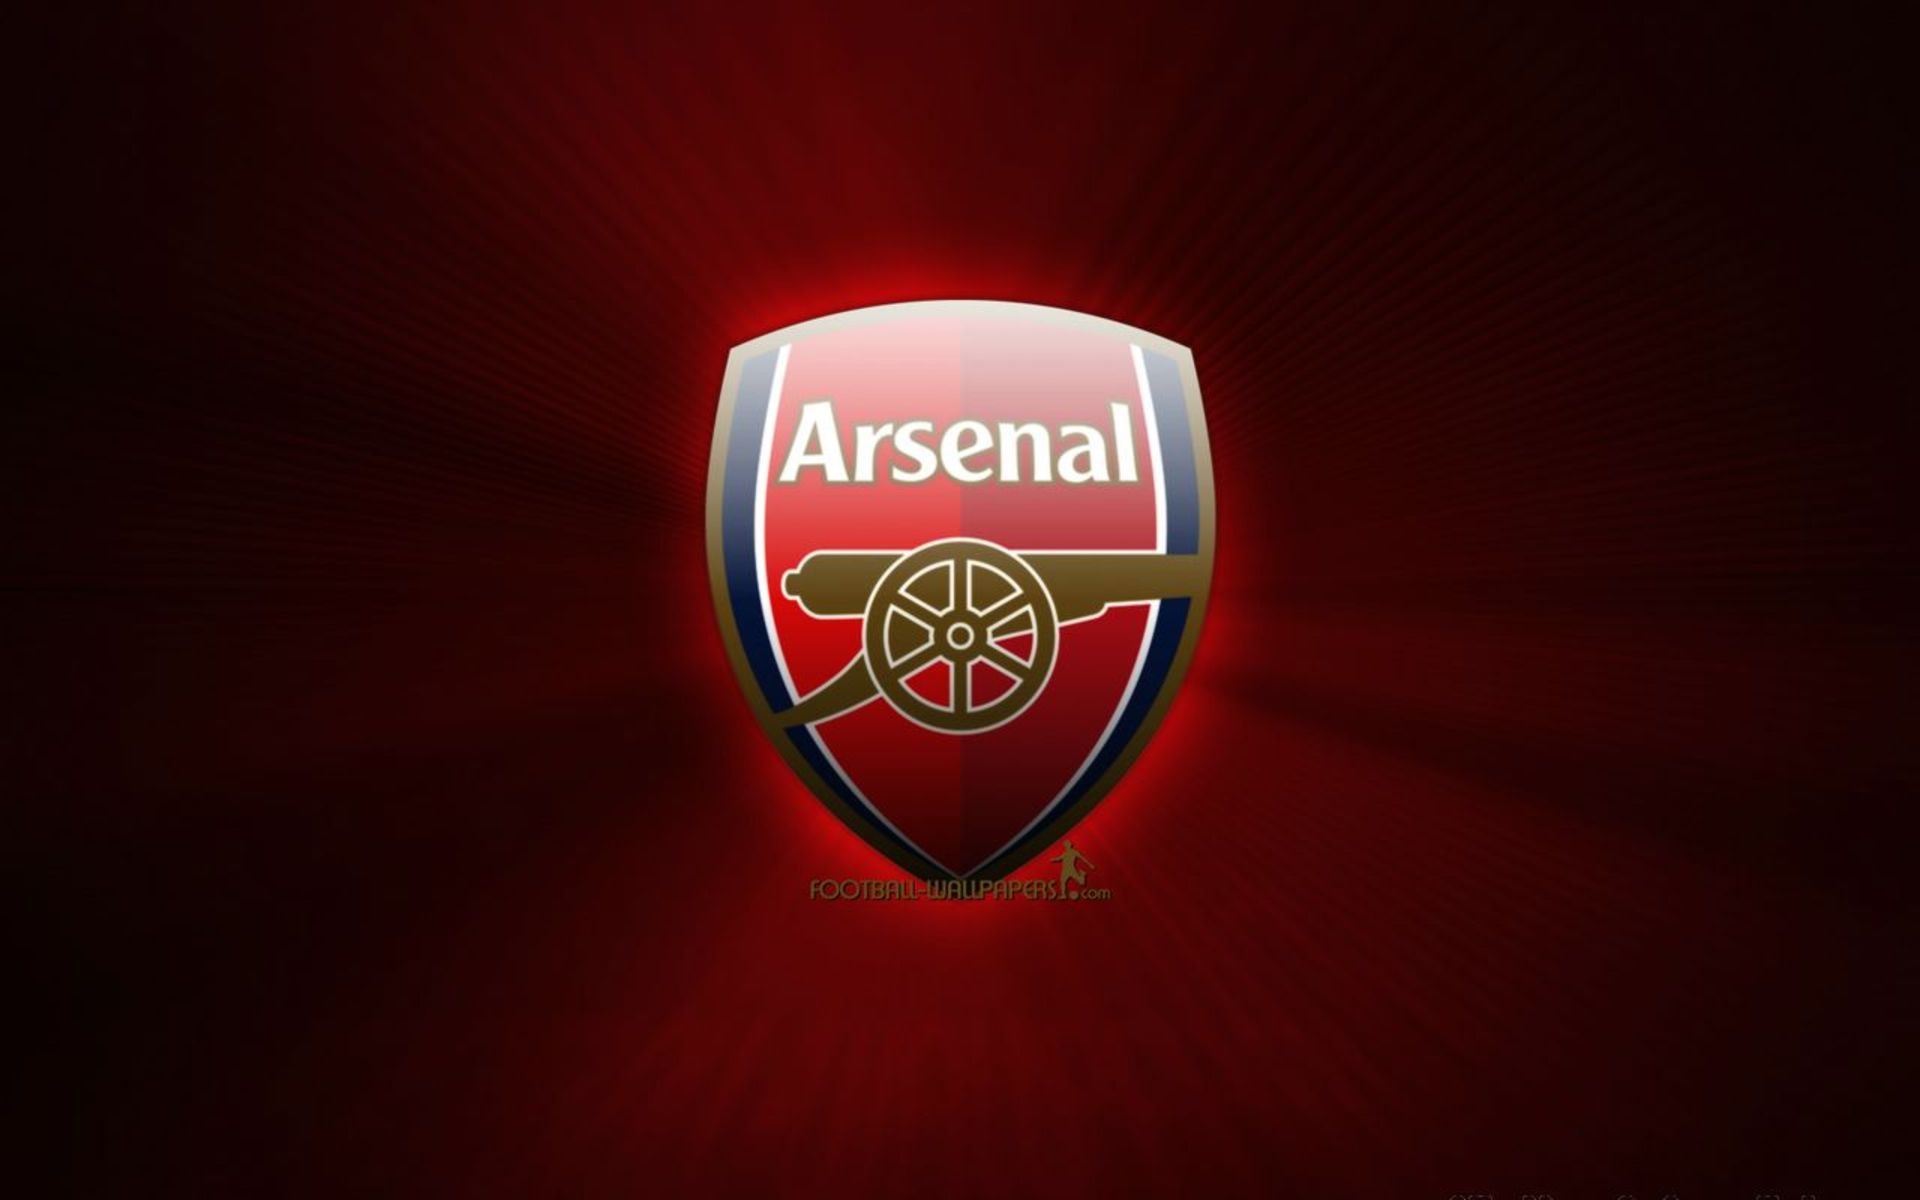 Arsenal Image: Wallpaper Background